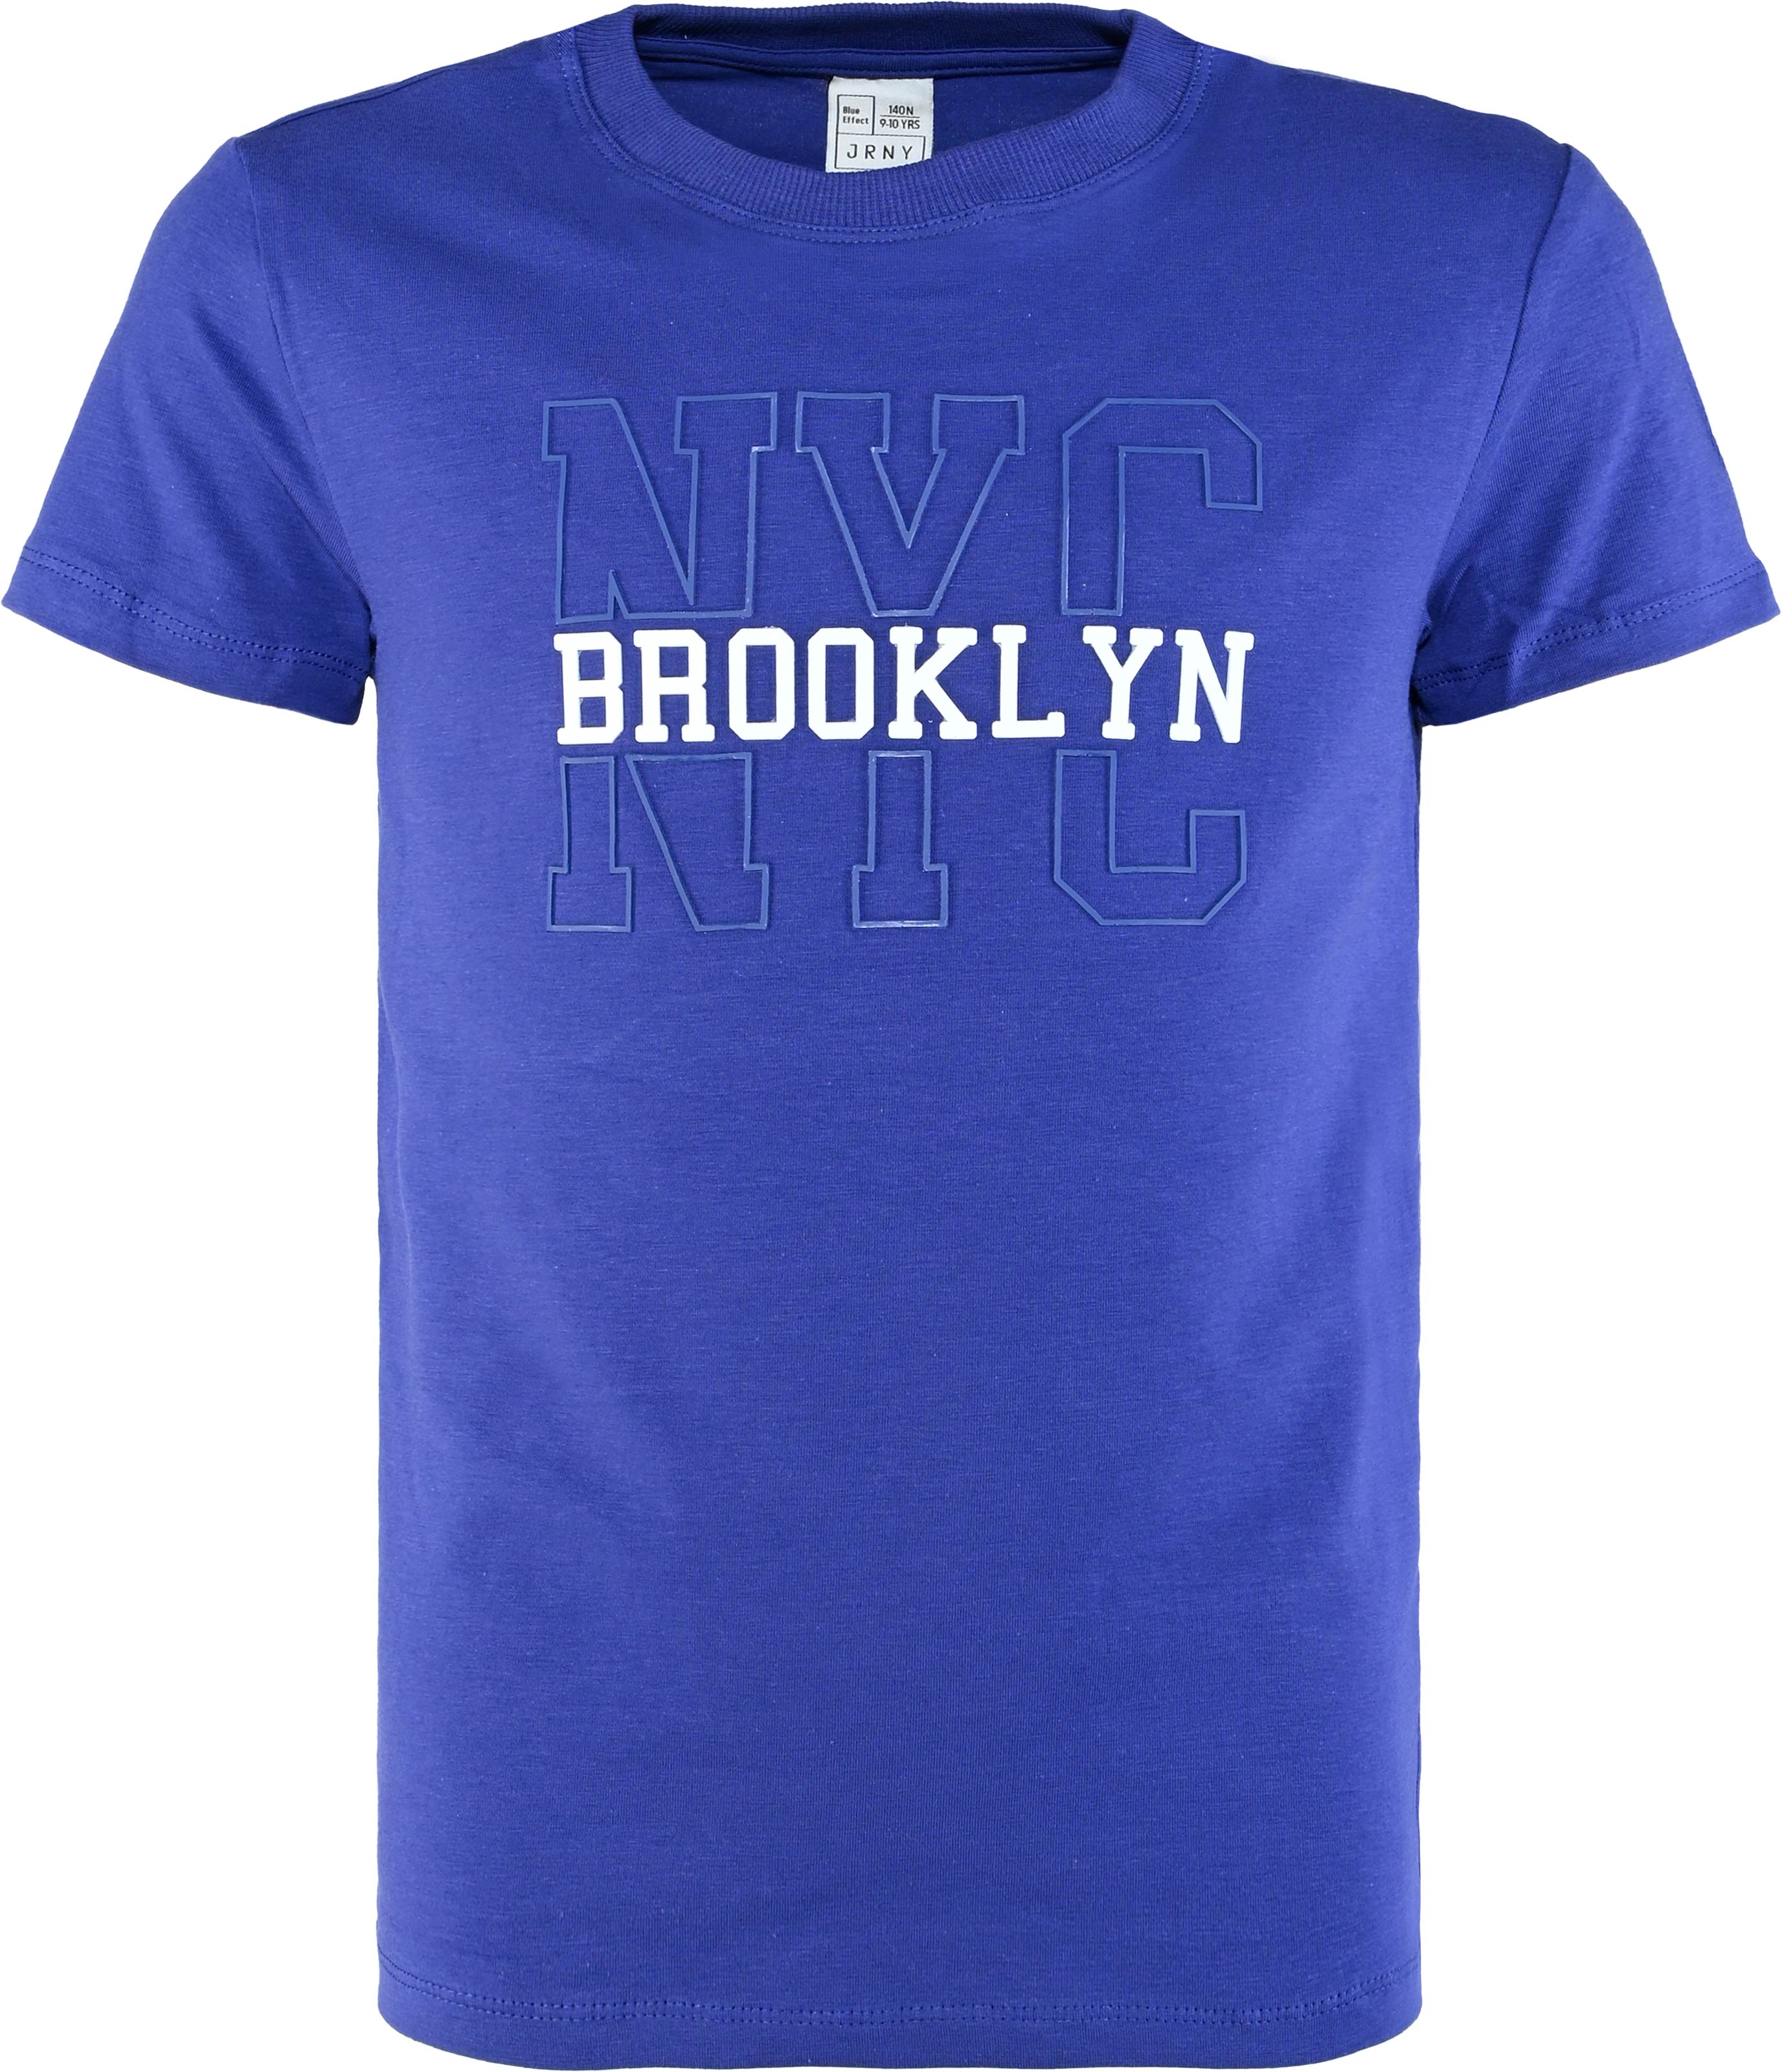 6261-JRNY Boys T-Shirt -NYC Brooklyn